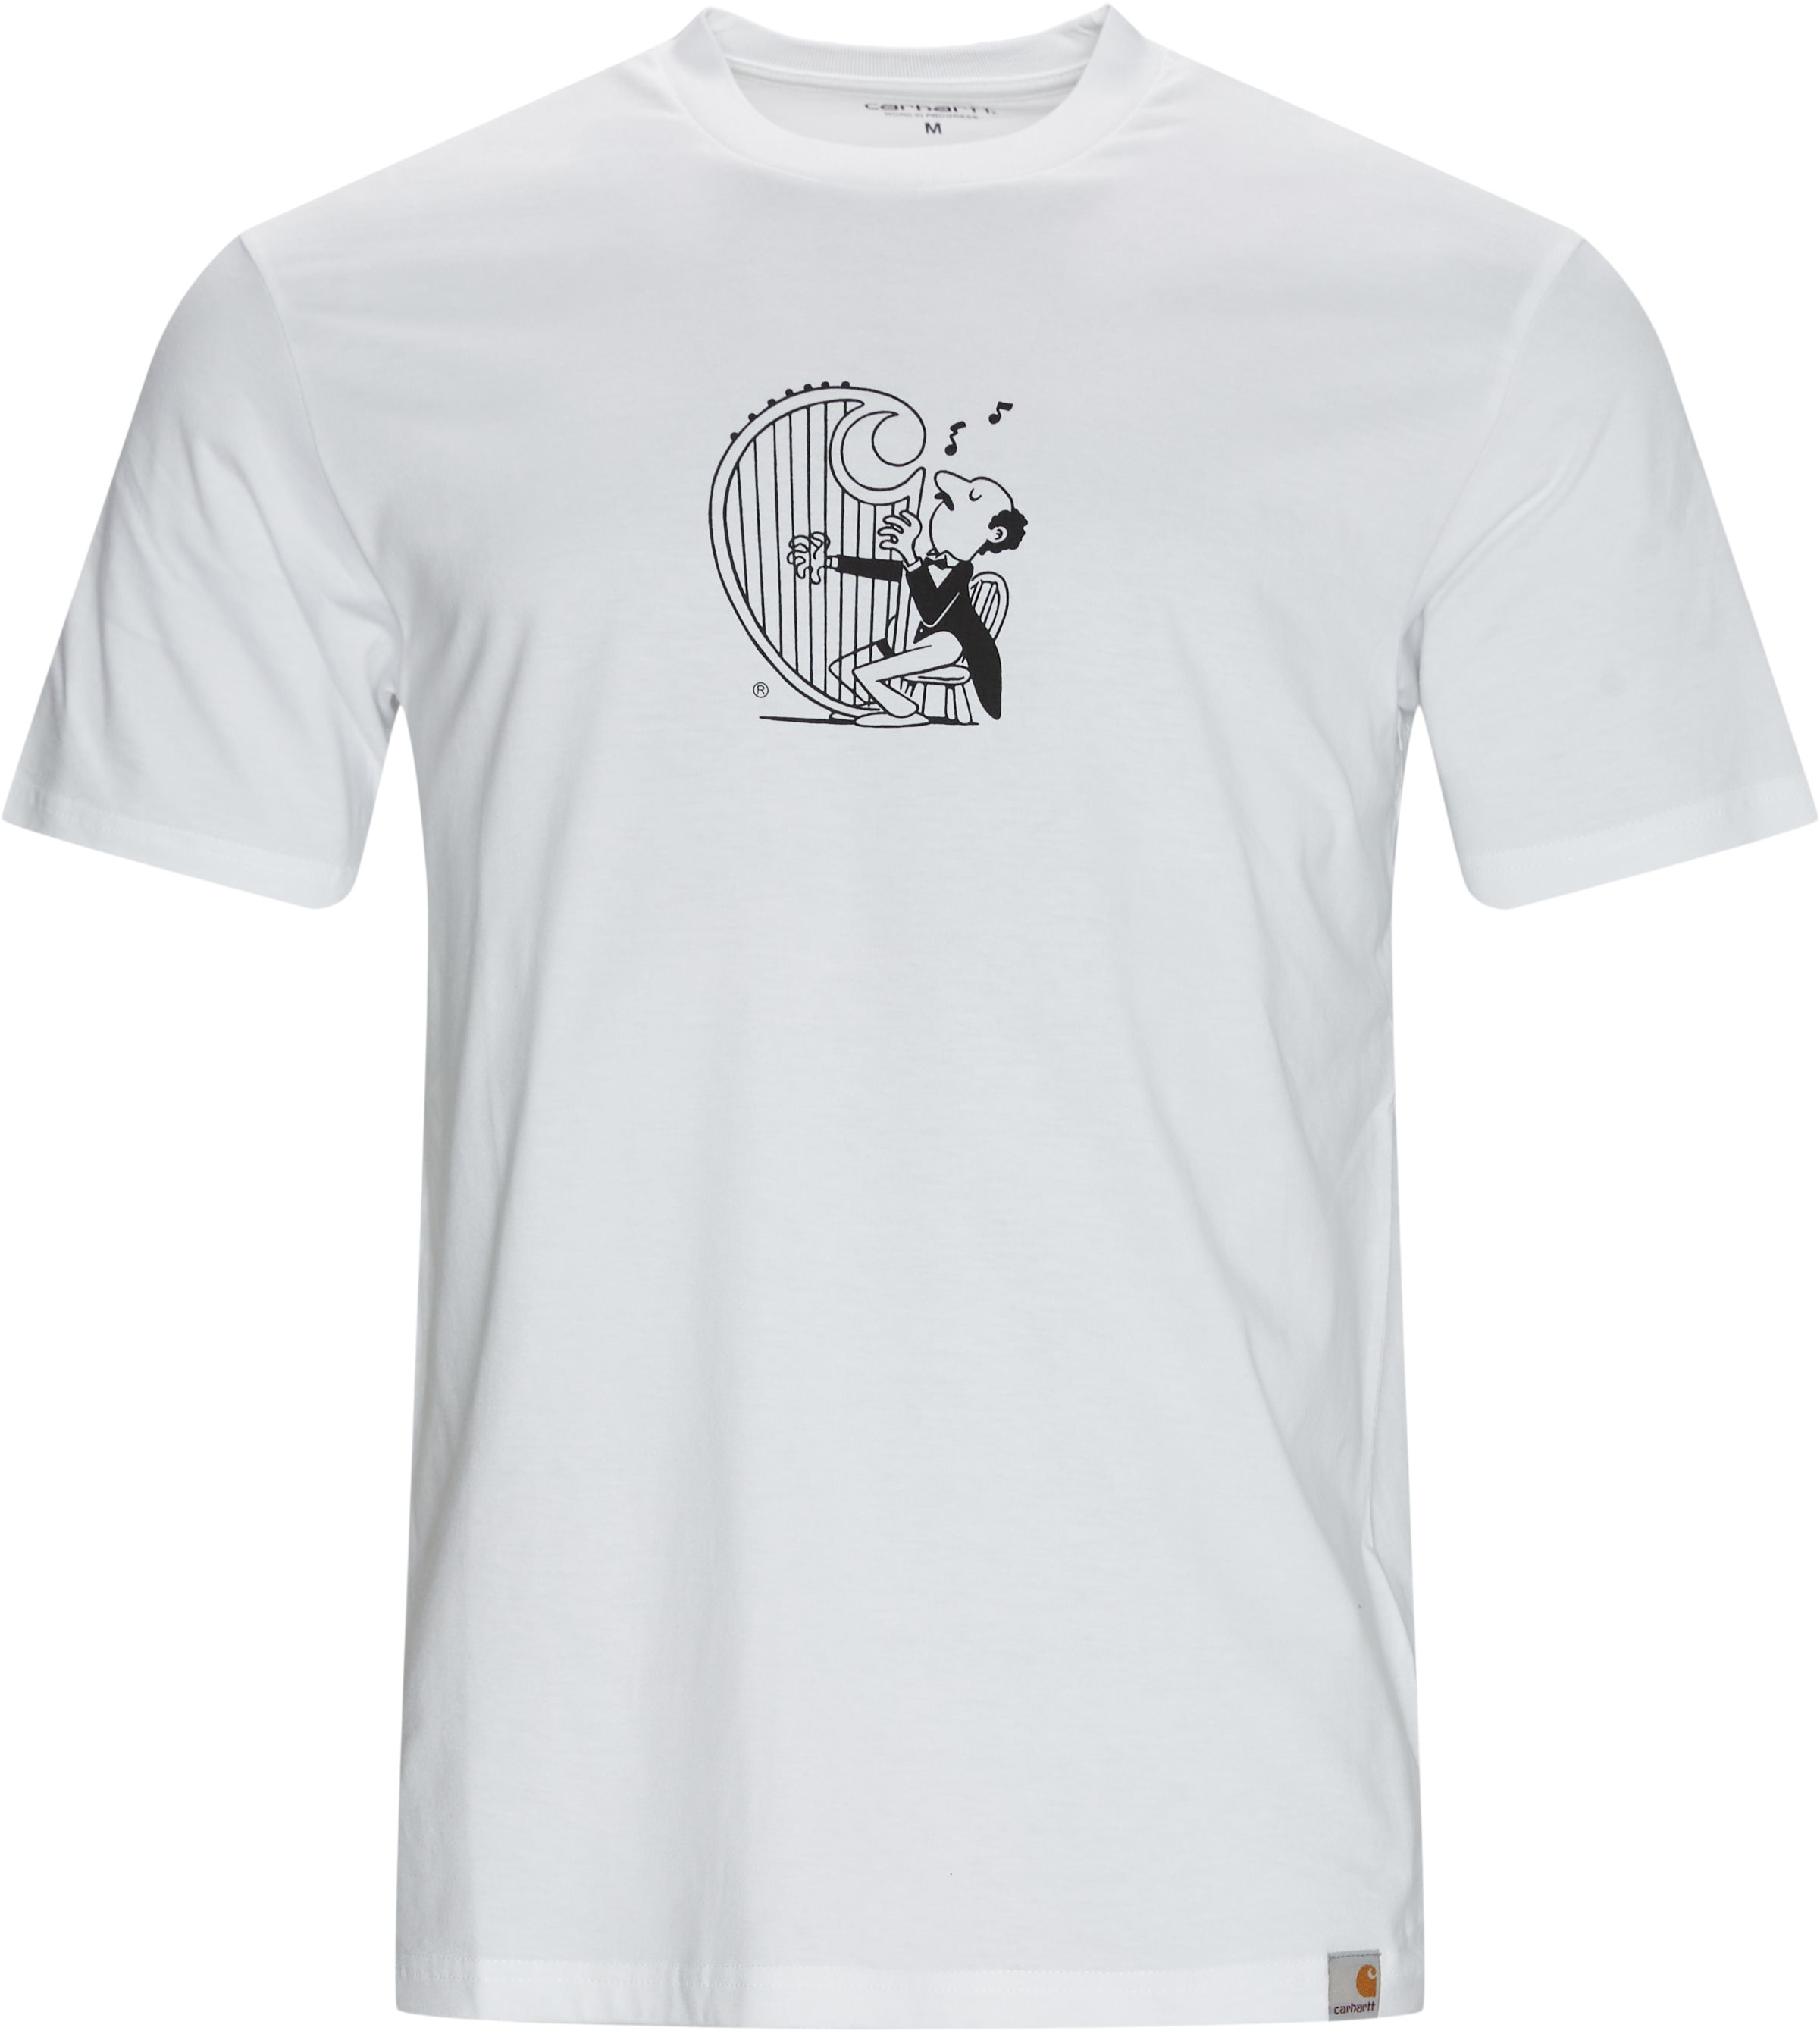 Harp Tee - T-shirts - Regular fit - Vit